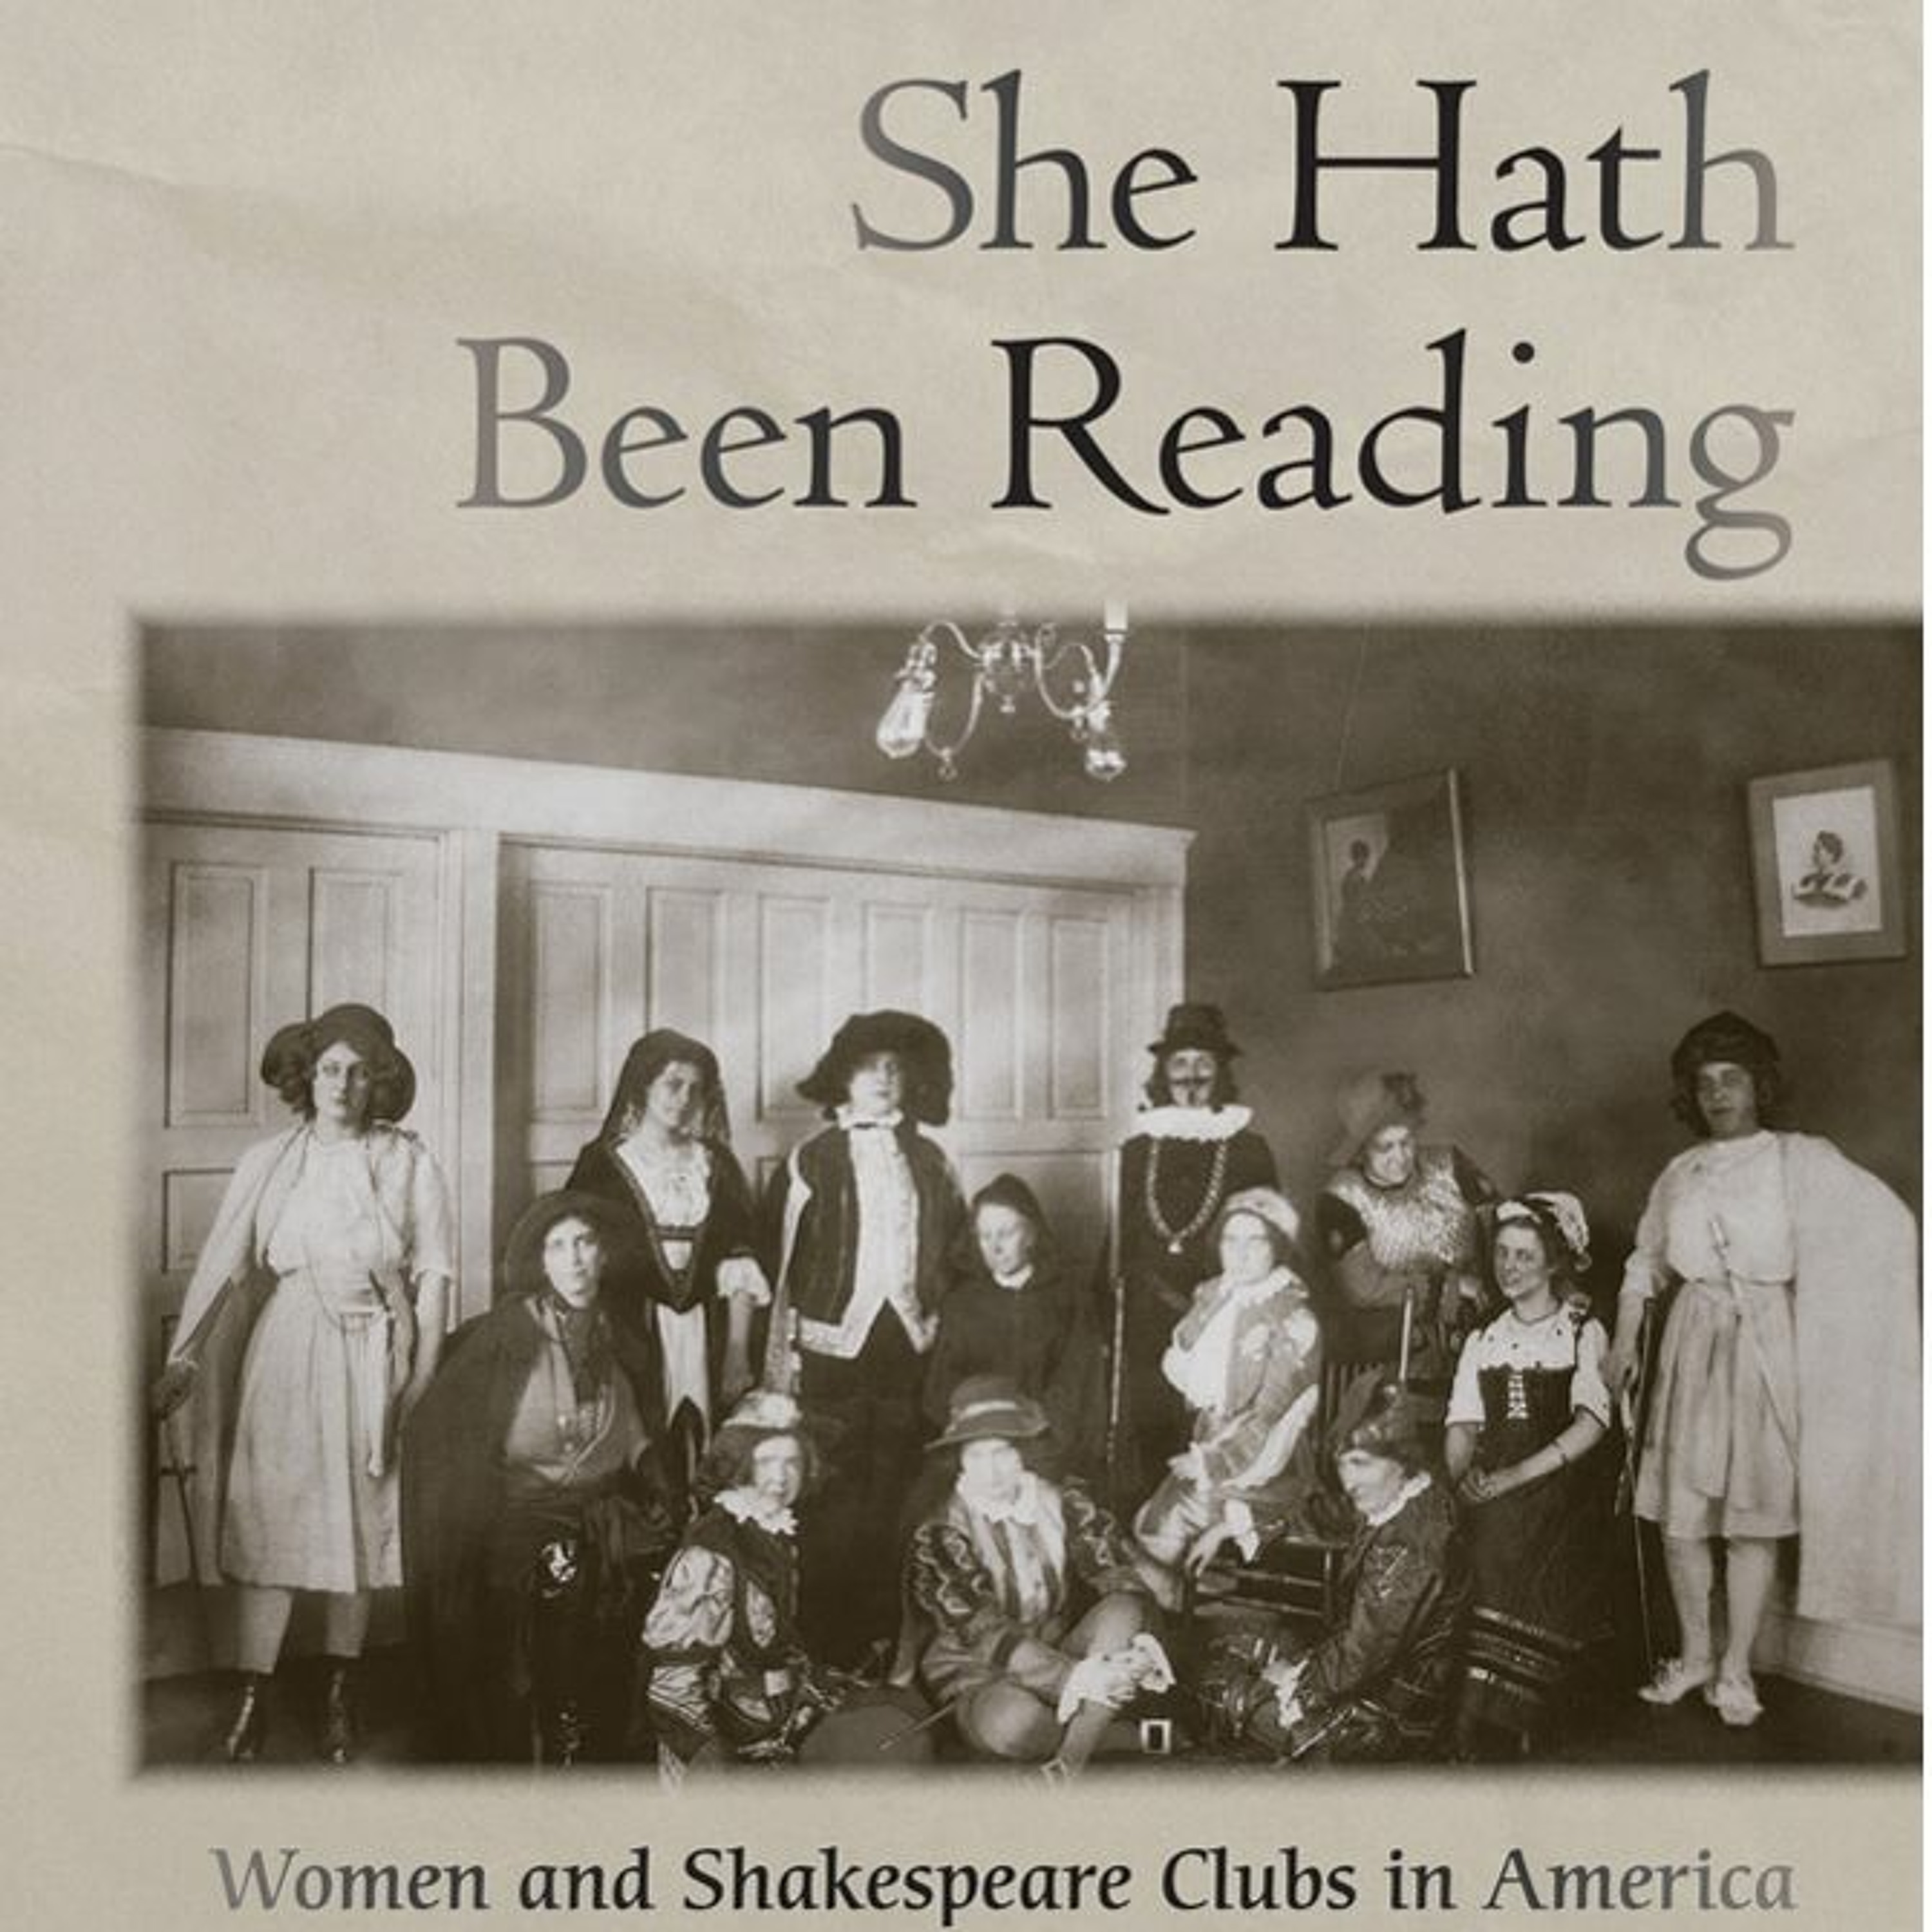 Prof. Katherine Scheil on Anne Hathaway & Women’s Reading Books of Shakespeare